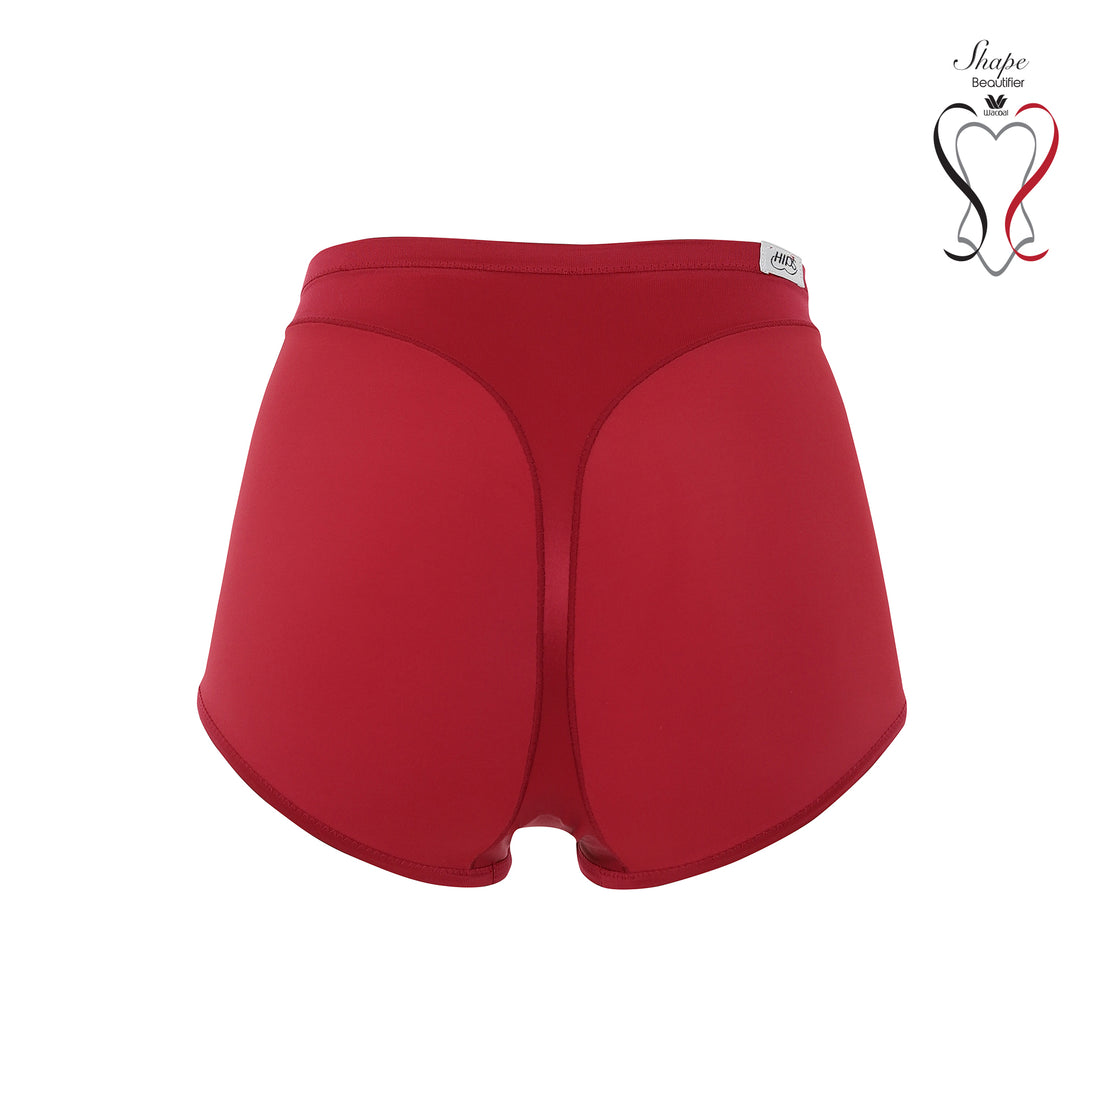 Wacoal Shapewear Hips Tummy Shaping Pants, Model WY1128, Cherry Red (CH)